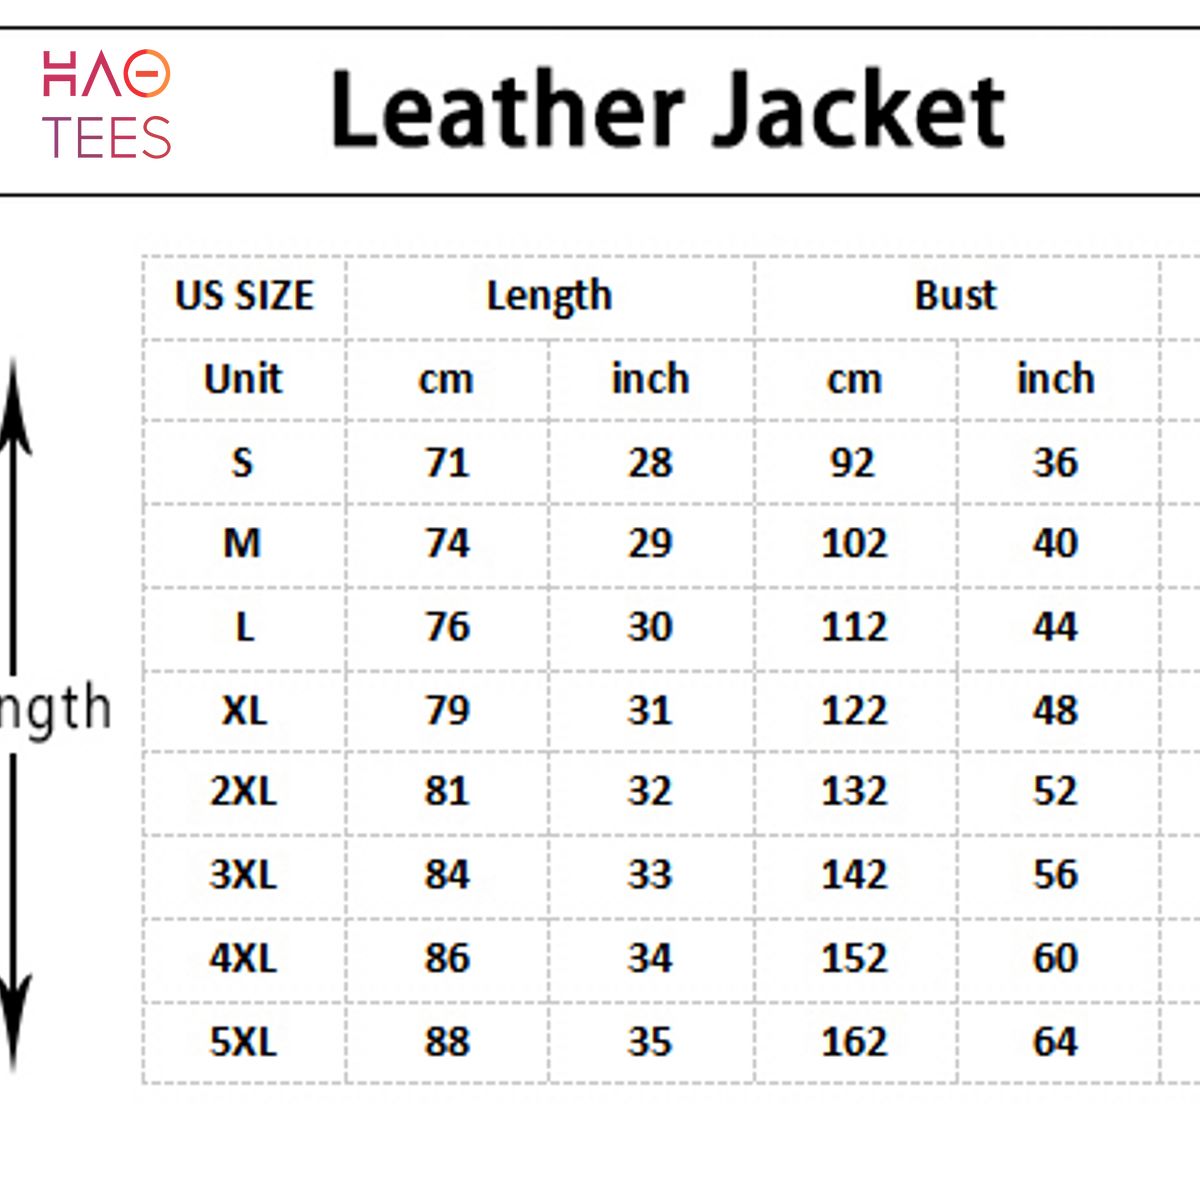 Fendi Men’s Limited Edition New Leather Jacket